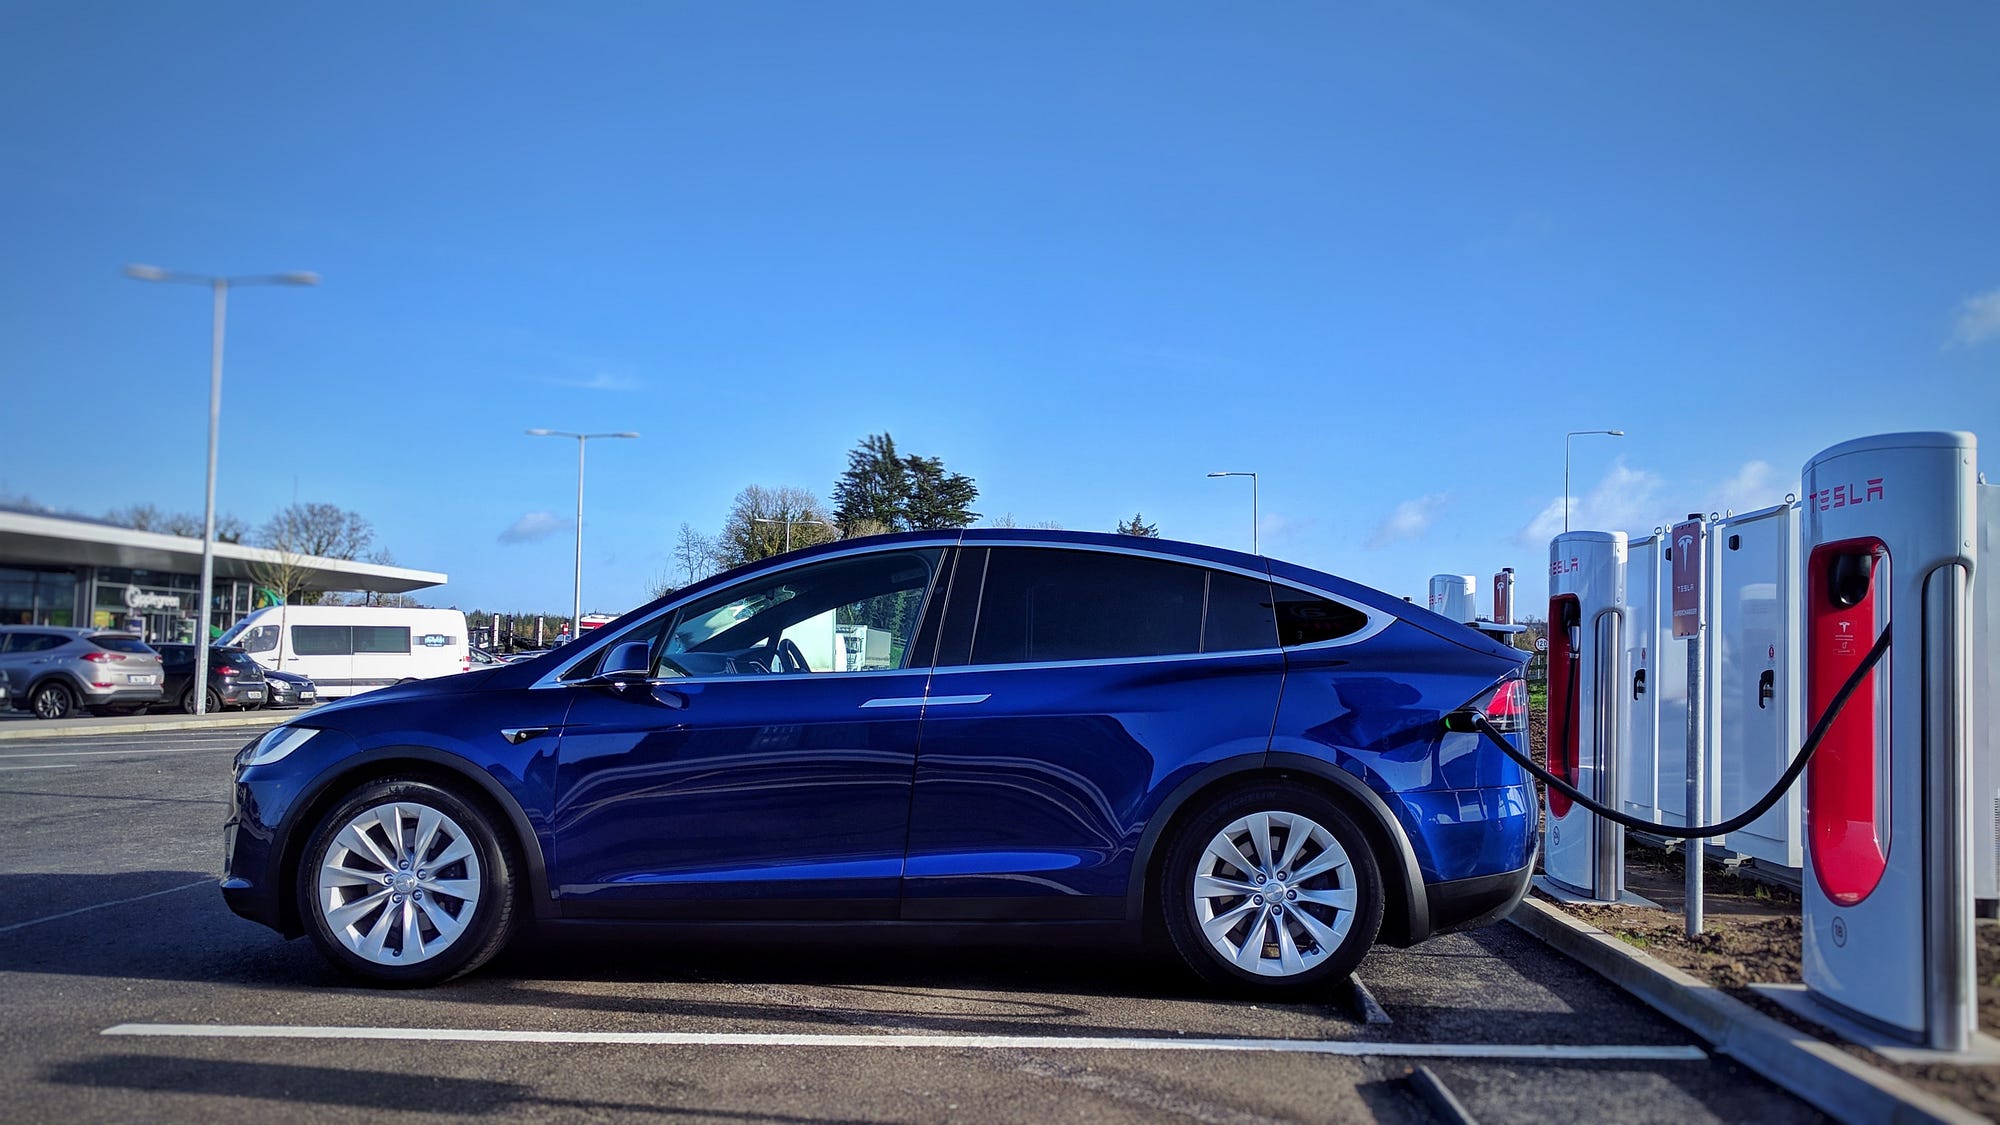 Tesla opens Ireland’s second Supercharger station Ireland’s